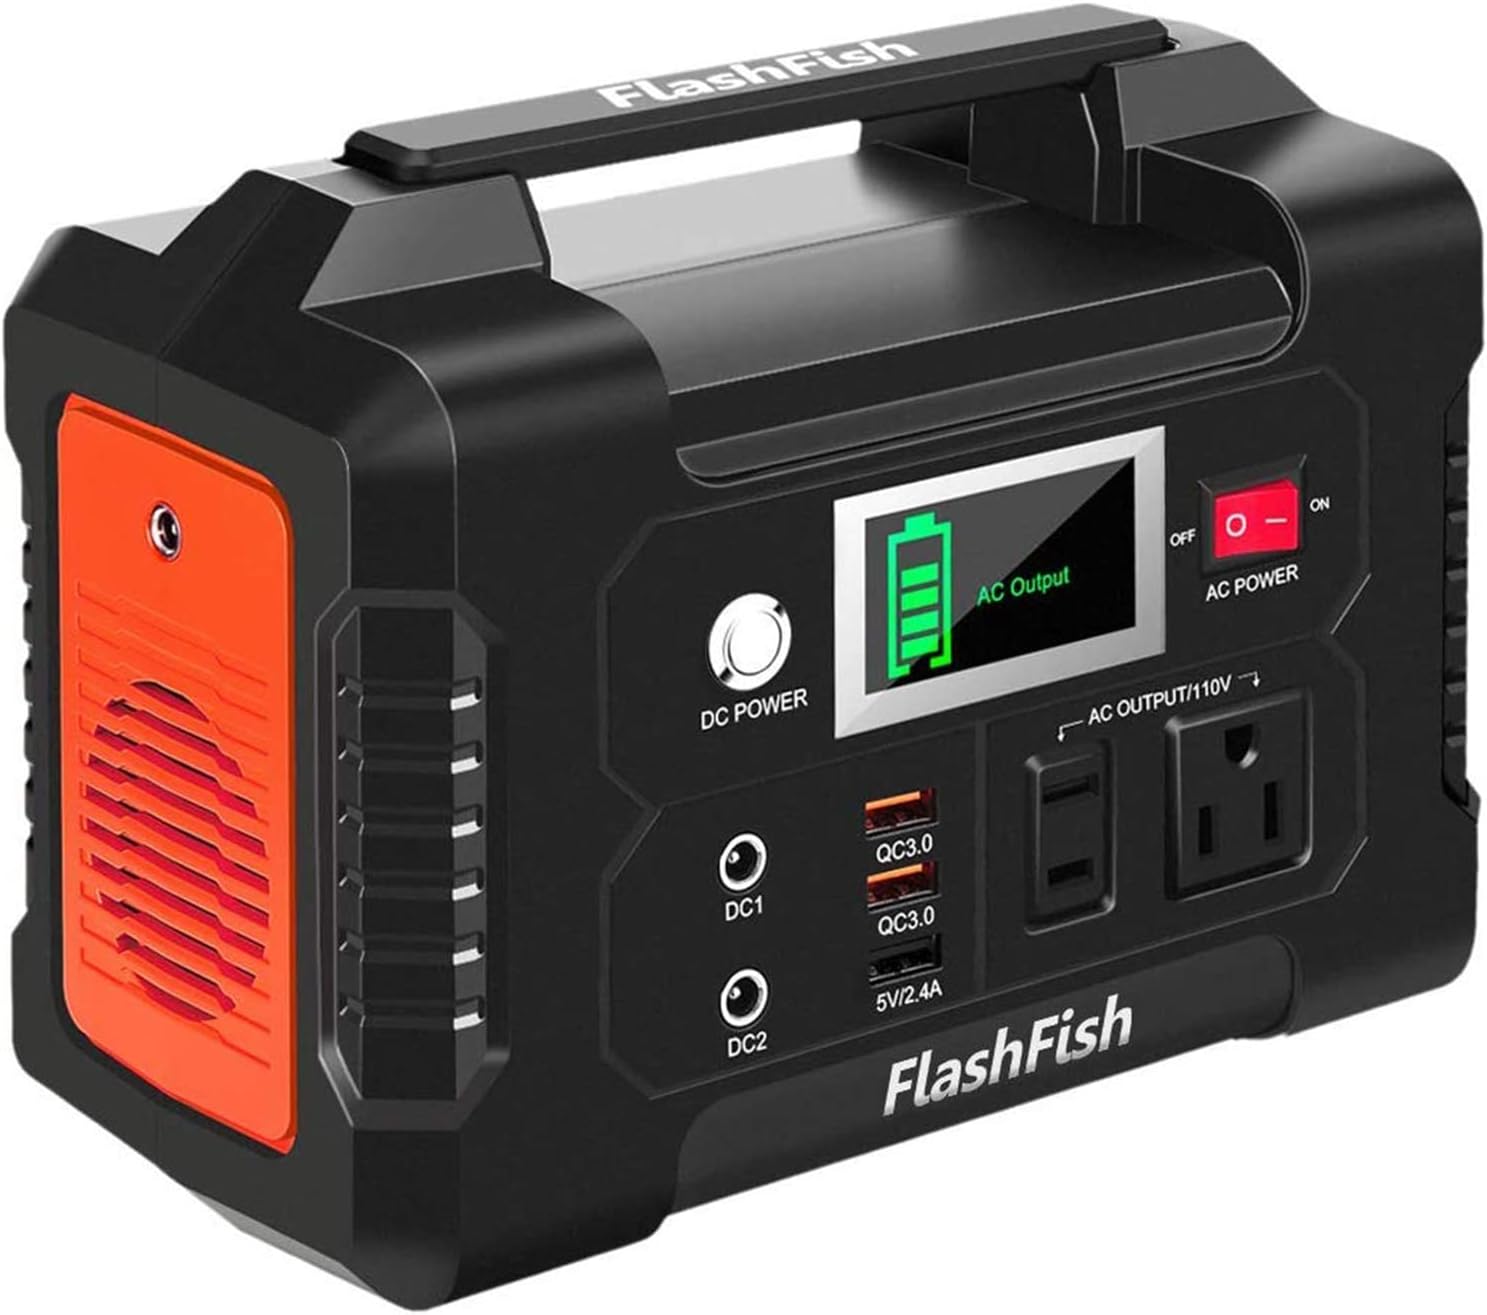 FlashFish 200W Portable Power Station Review